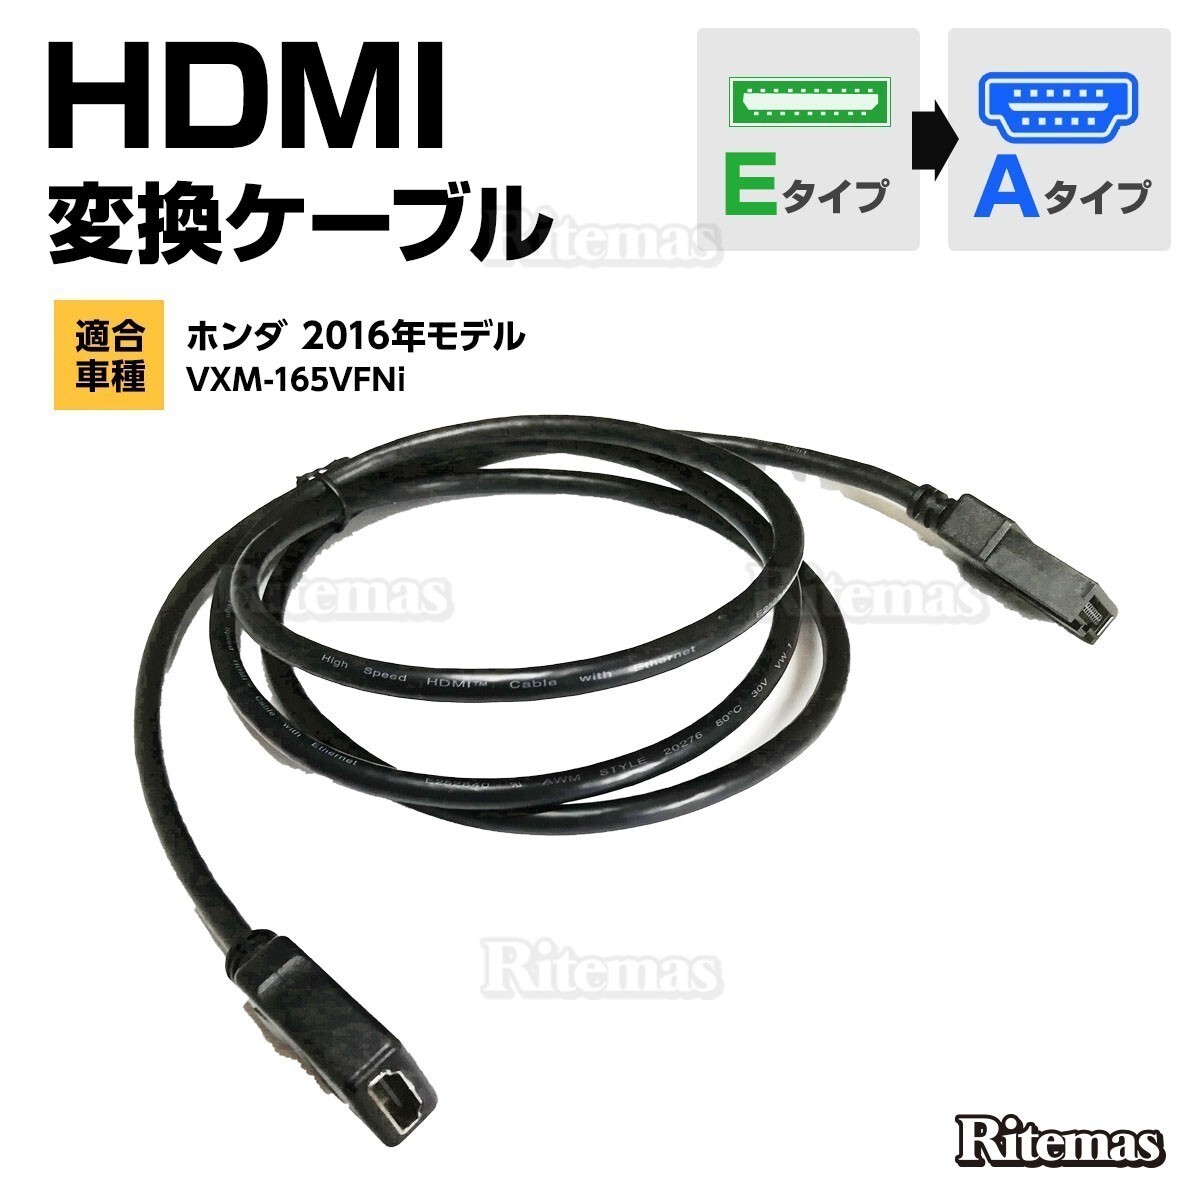 HDMI 変換 ケーブル カーナビ ホンダ 2016年モデル VXM-165VFNi タイプE タイプA 接続 配線 コード アダプター 車 ナビ ハーネス 外部入力の画像1